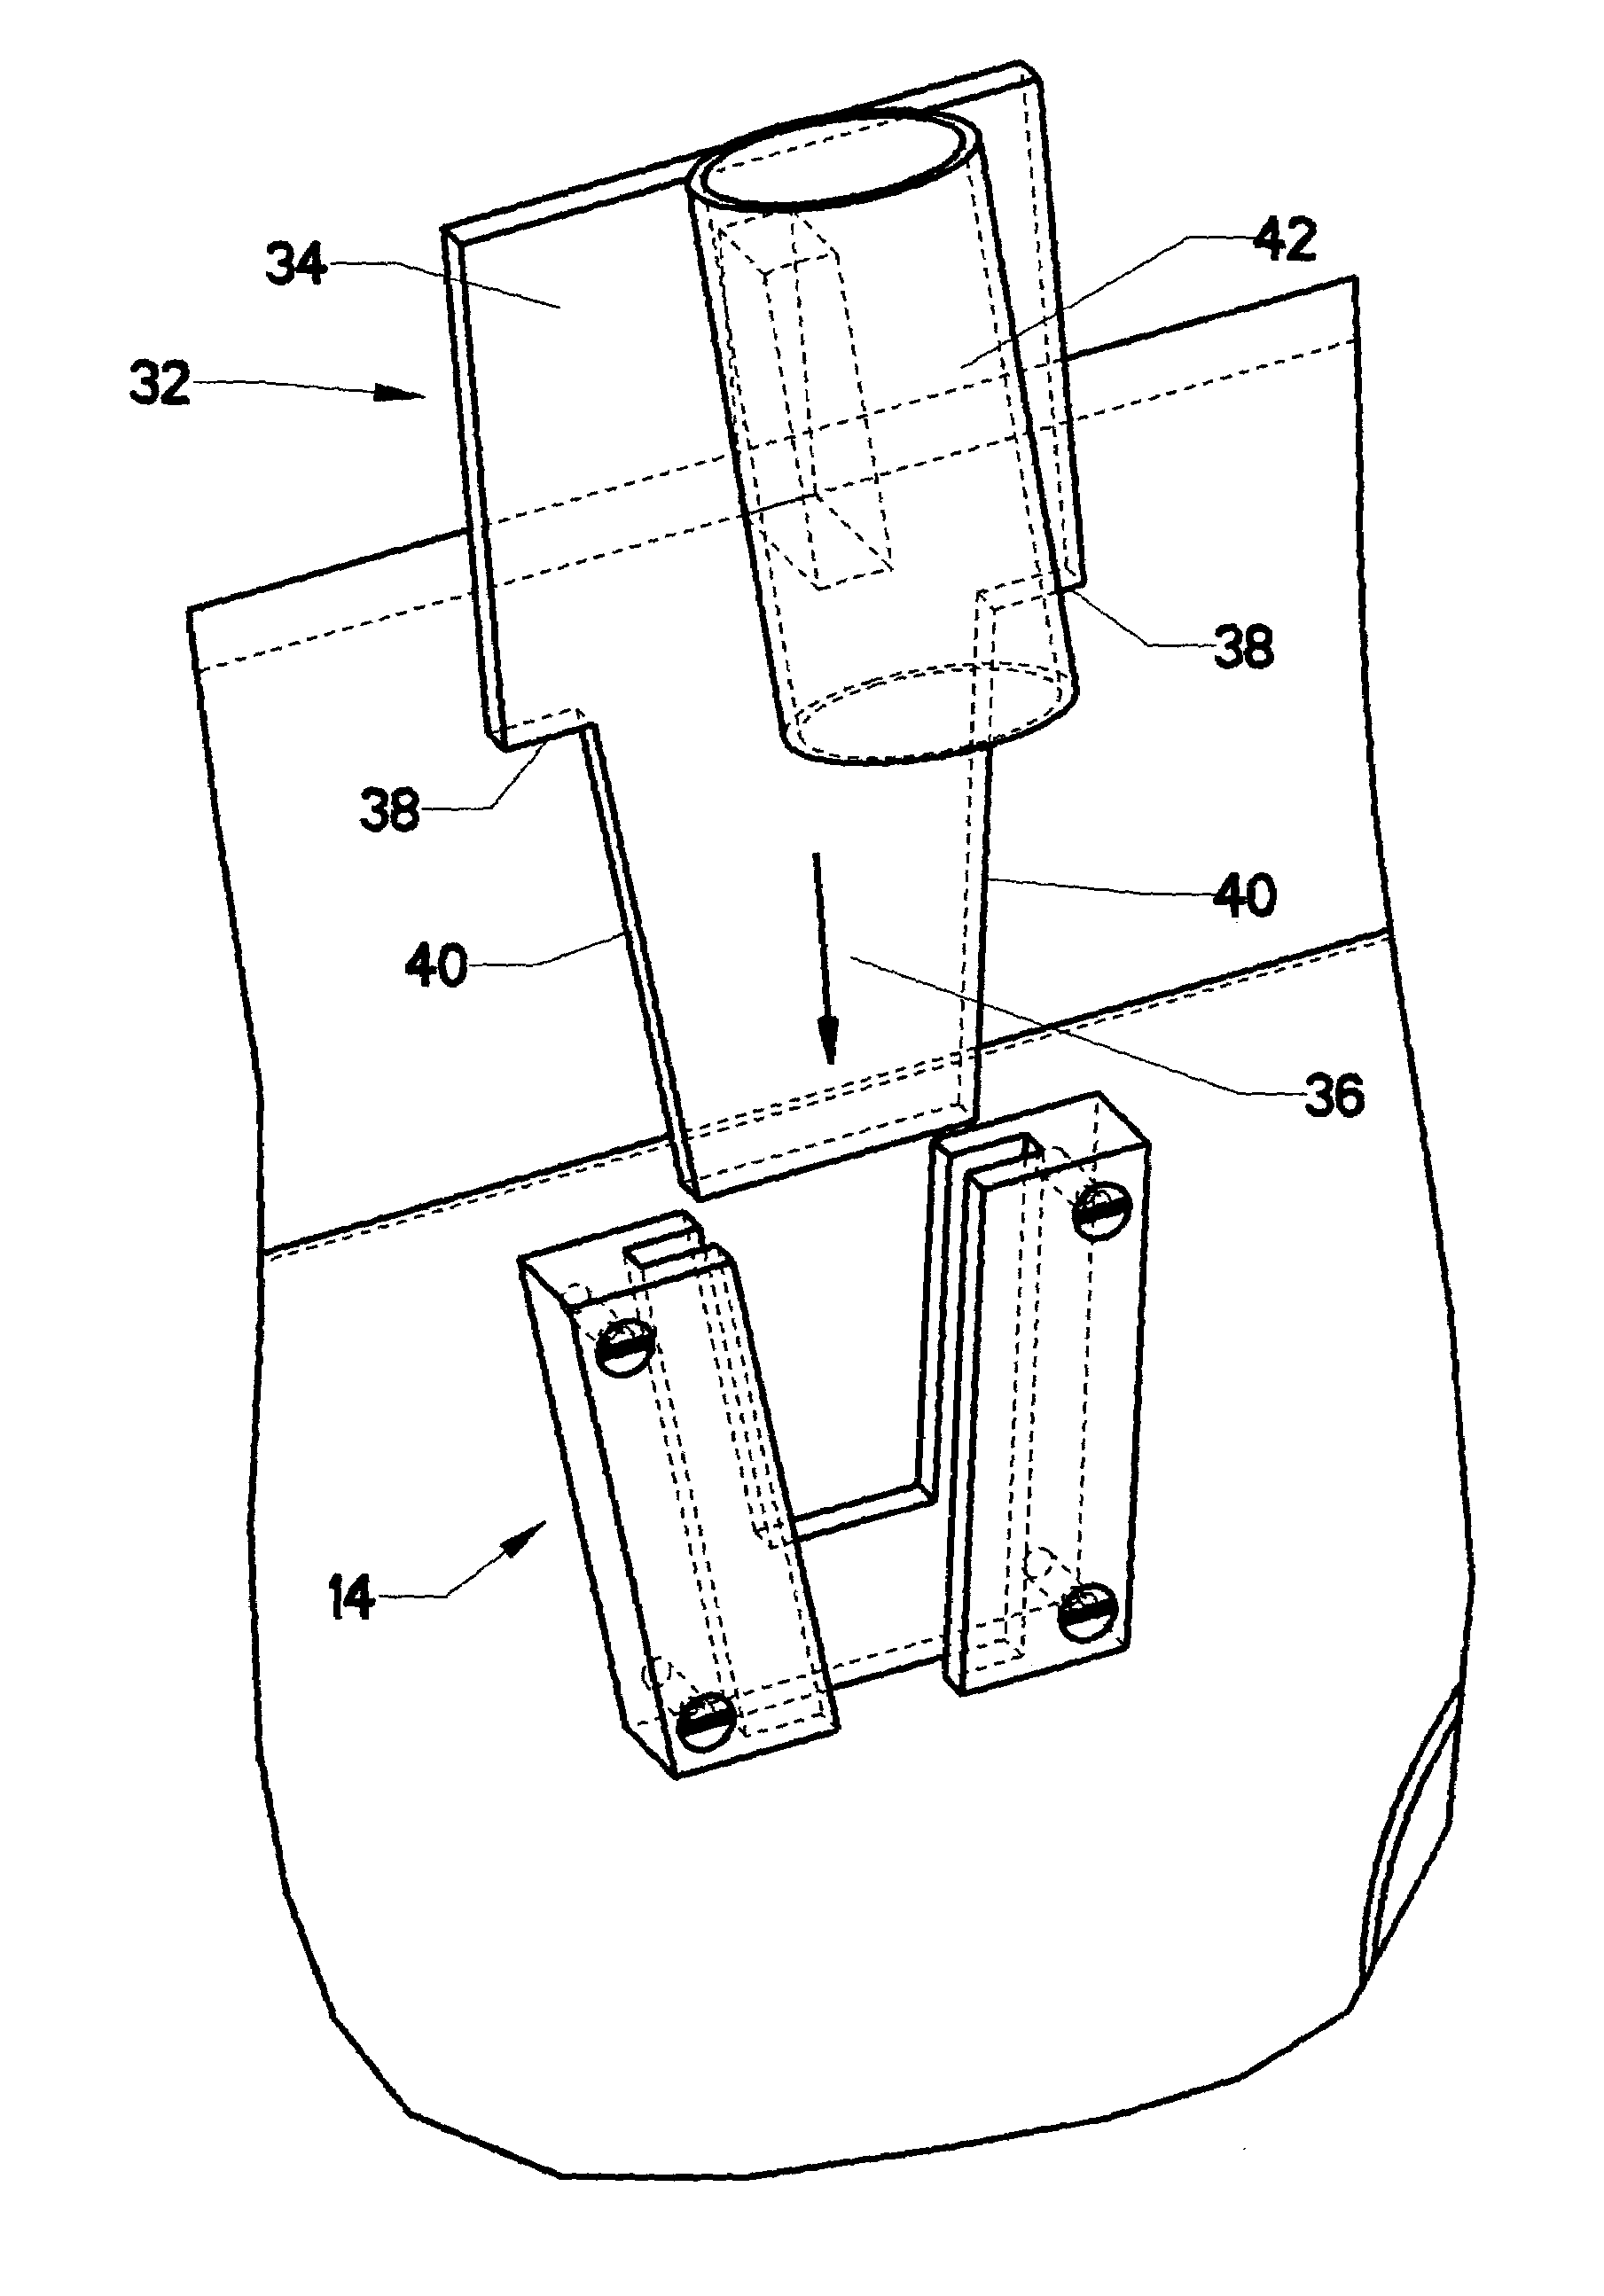 Modular accessory holder